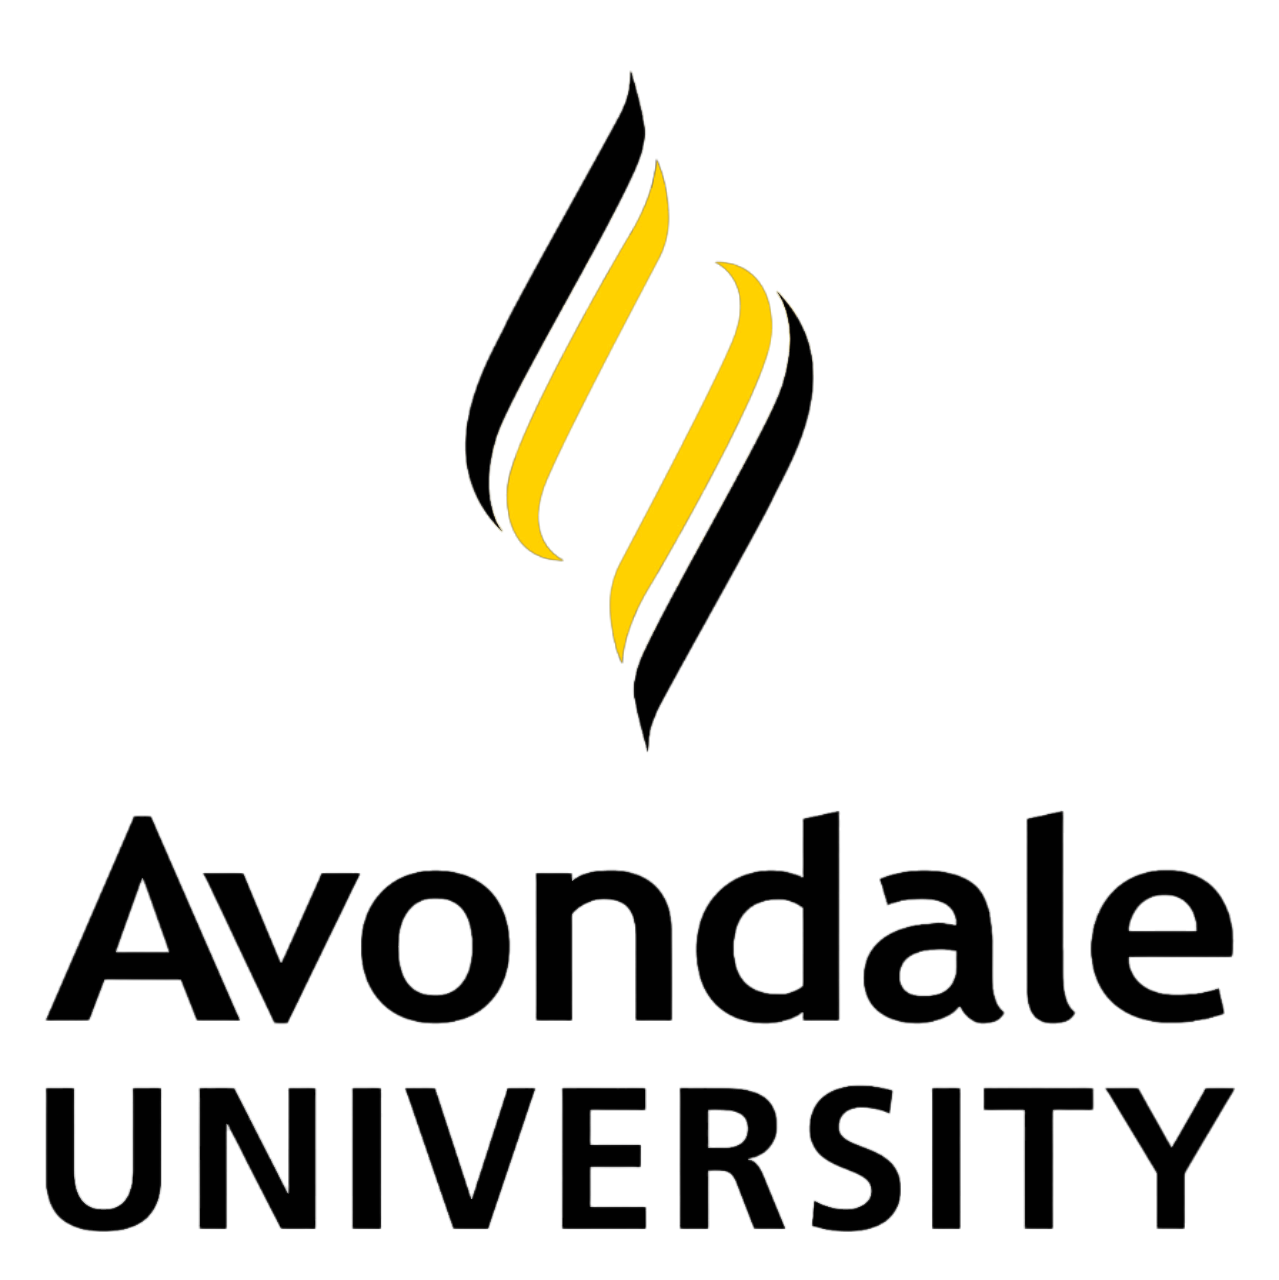 Avondale university